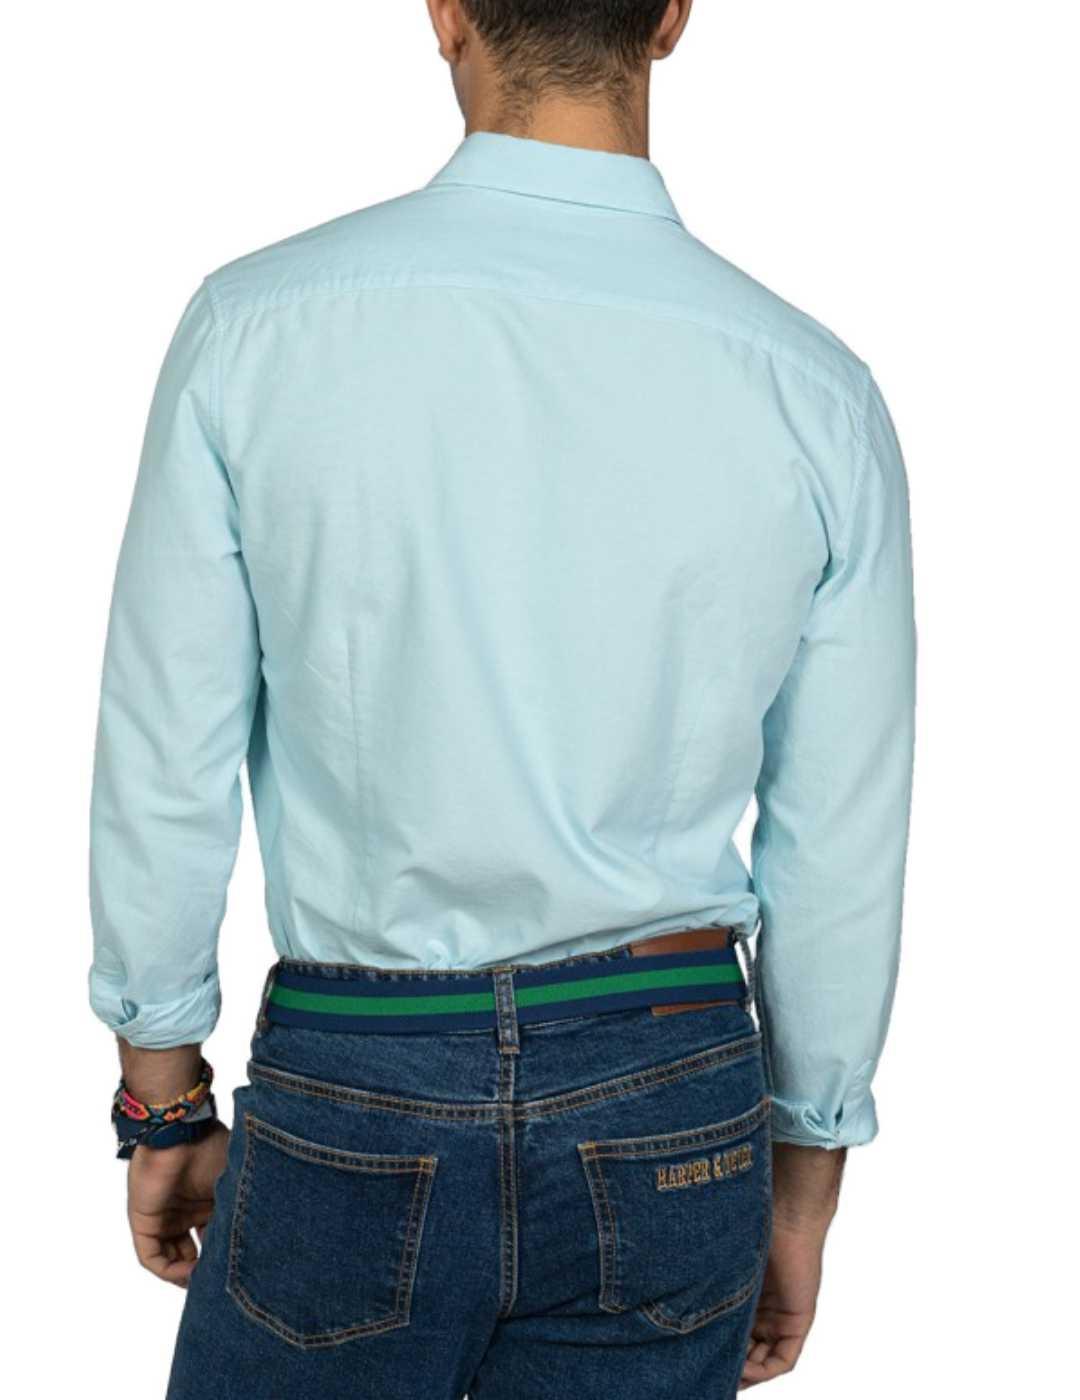 Camisa Harper Oxford azul turquesa para hombre